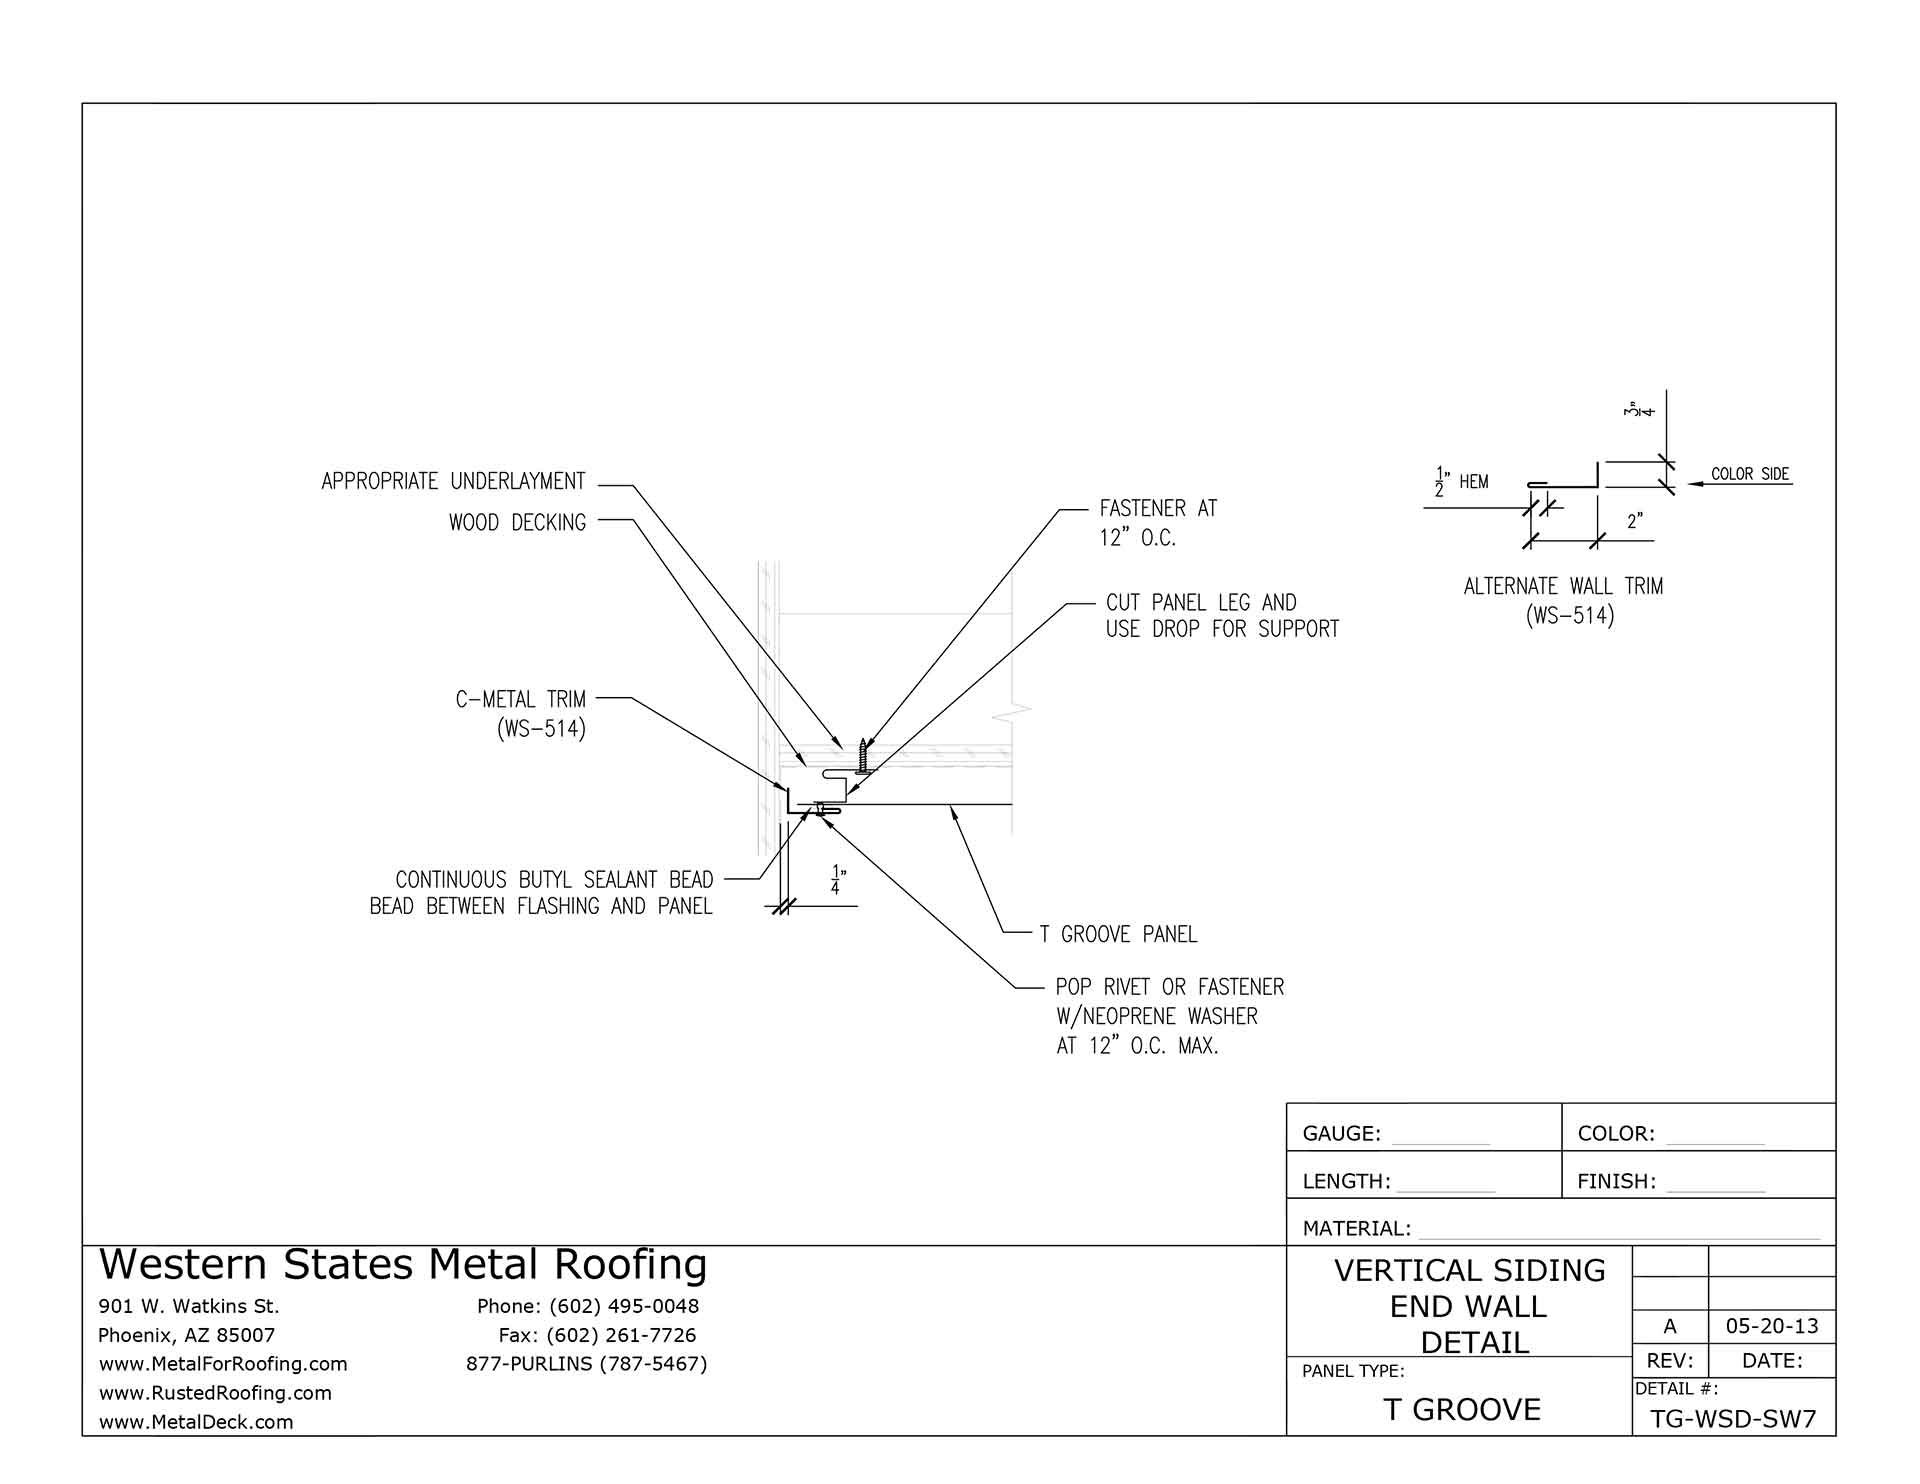 https://f.hubspotusercontent30.net/hubfs/6069238/images/trim-flashings/t-groove/tg-wsd-sw7-vertical-siding-end-wall-detail.jpg